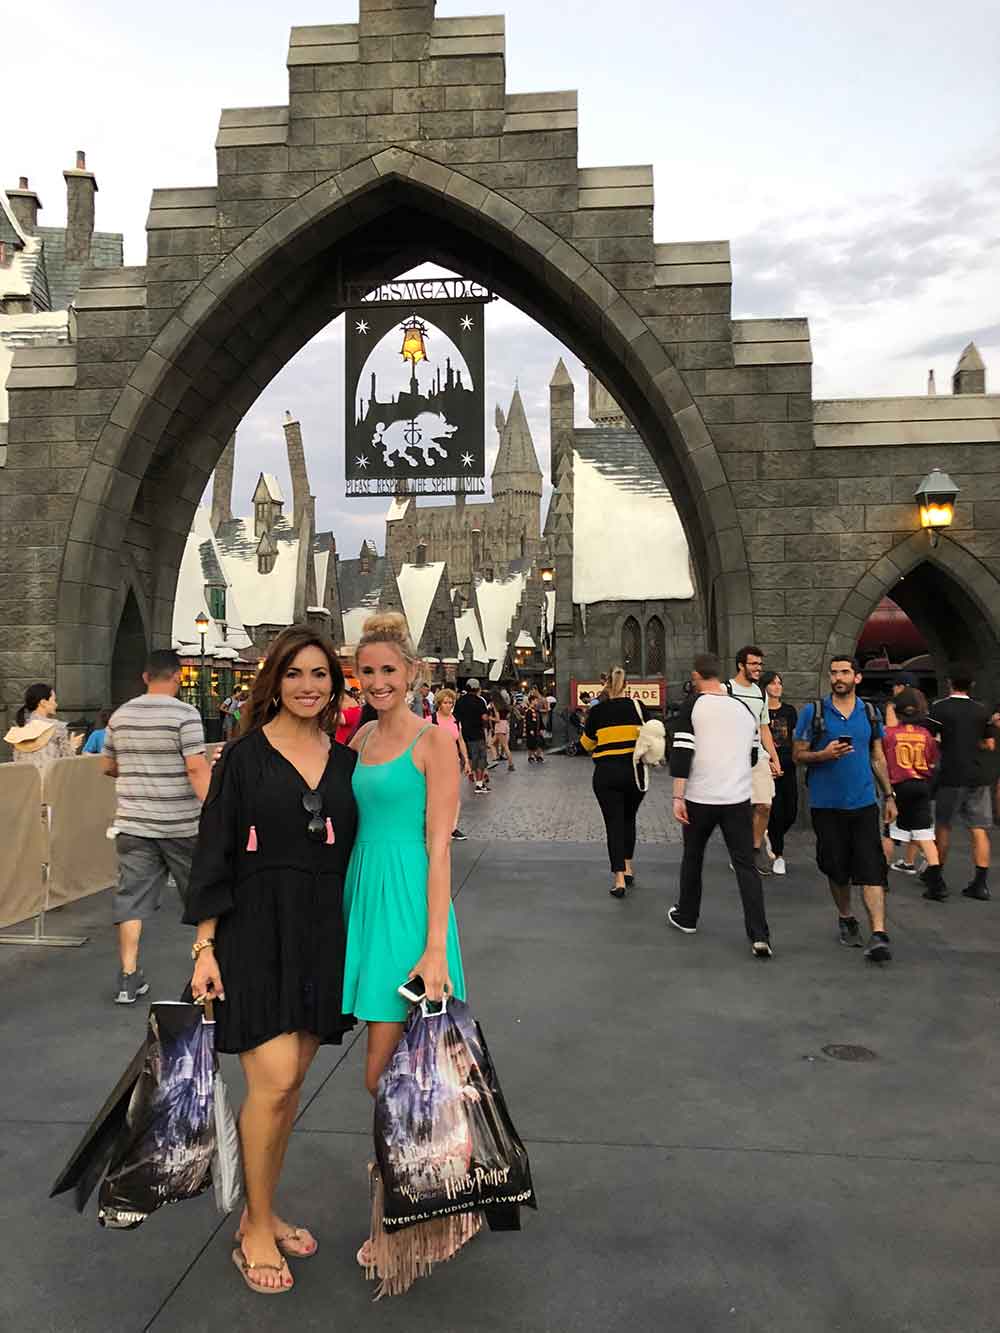 Wizarding World of Harry Potter Design - Universal Studios Hollywood